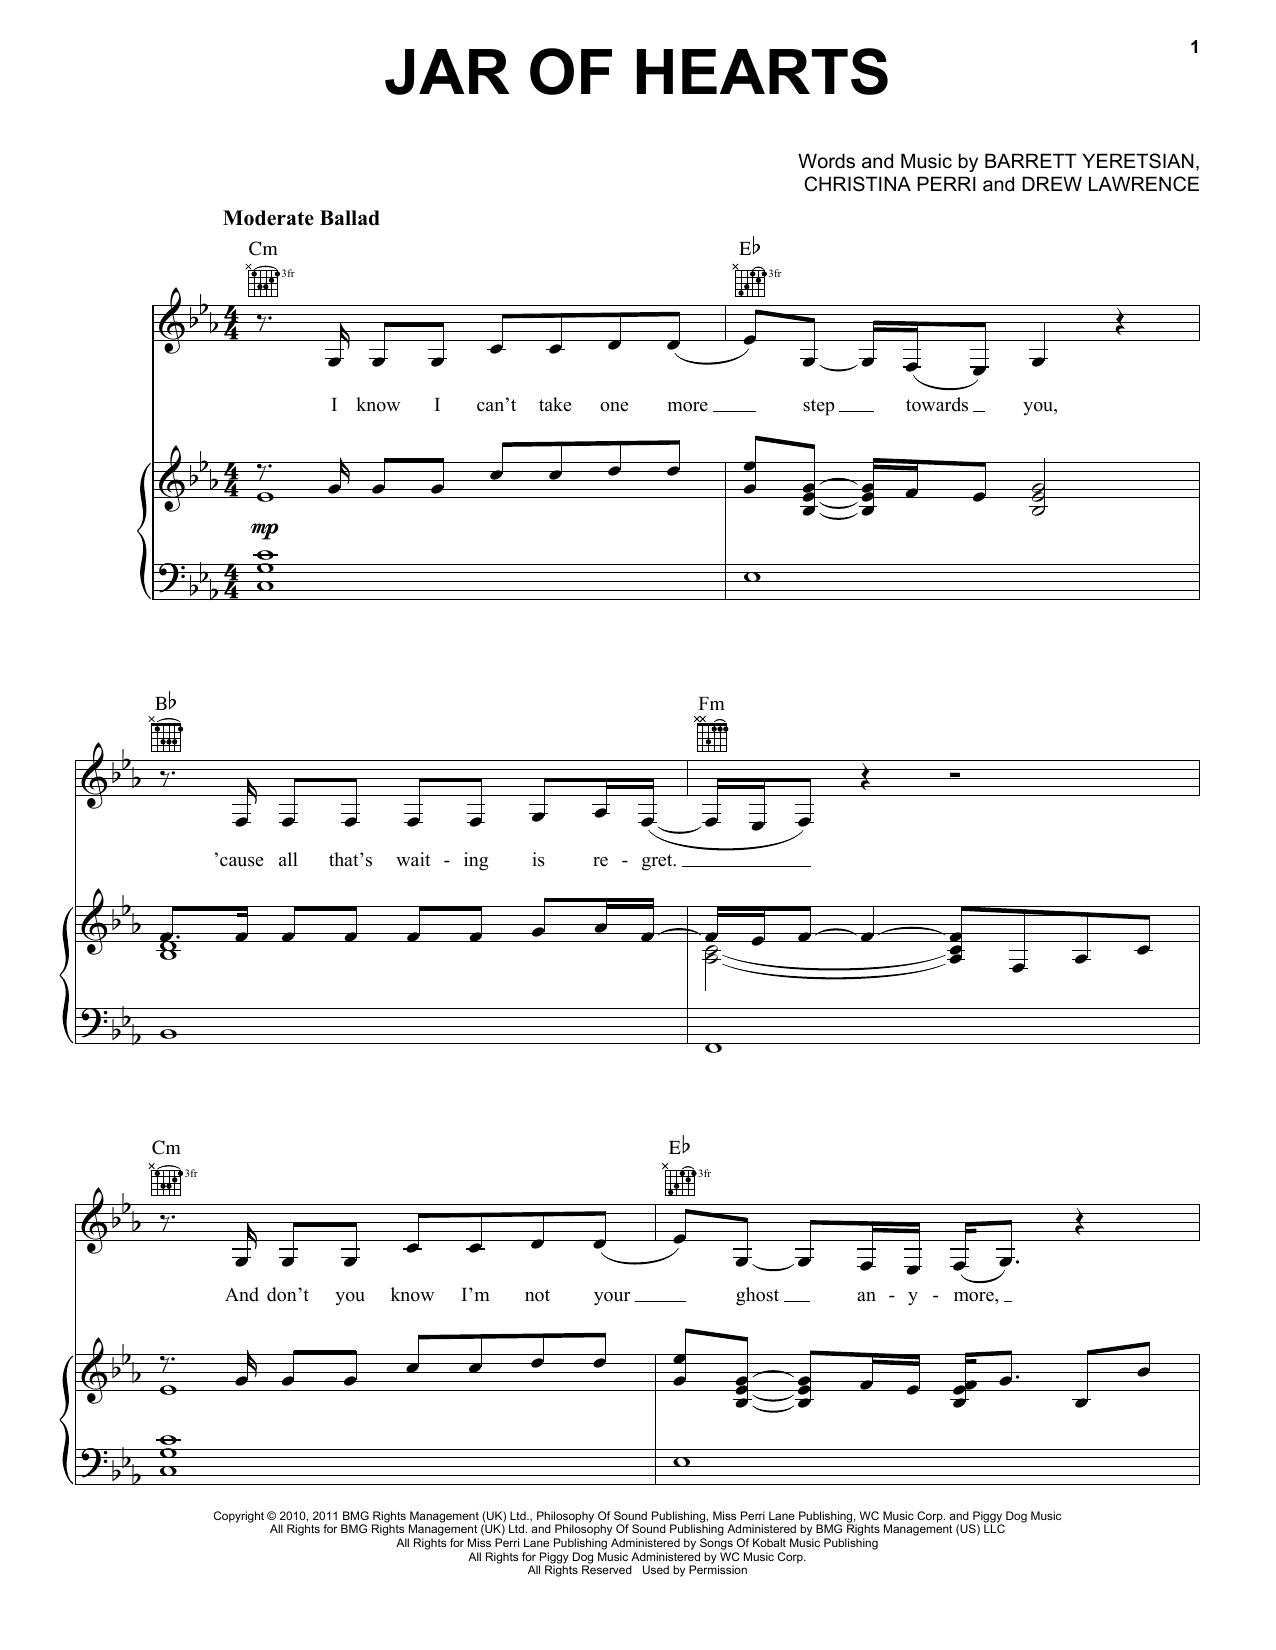 Christina Perri Jar Of Hearts Sheet Music Notes & Chords for Alto Saxophone - Download or Print PDF